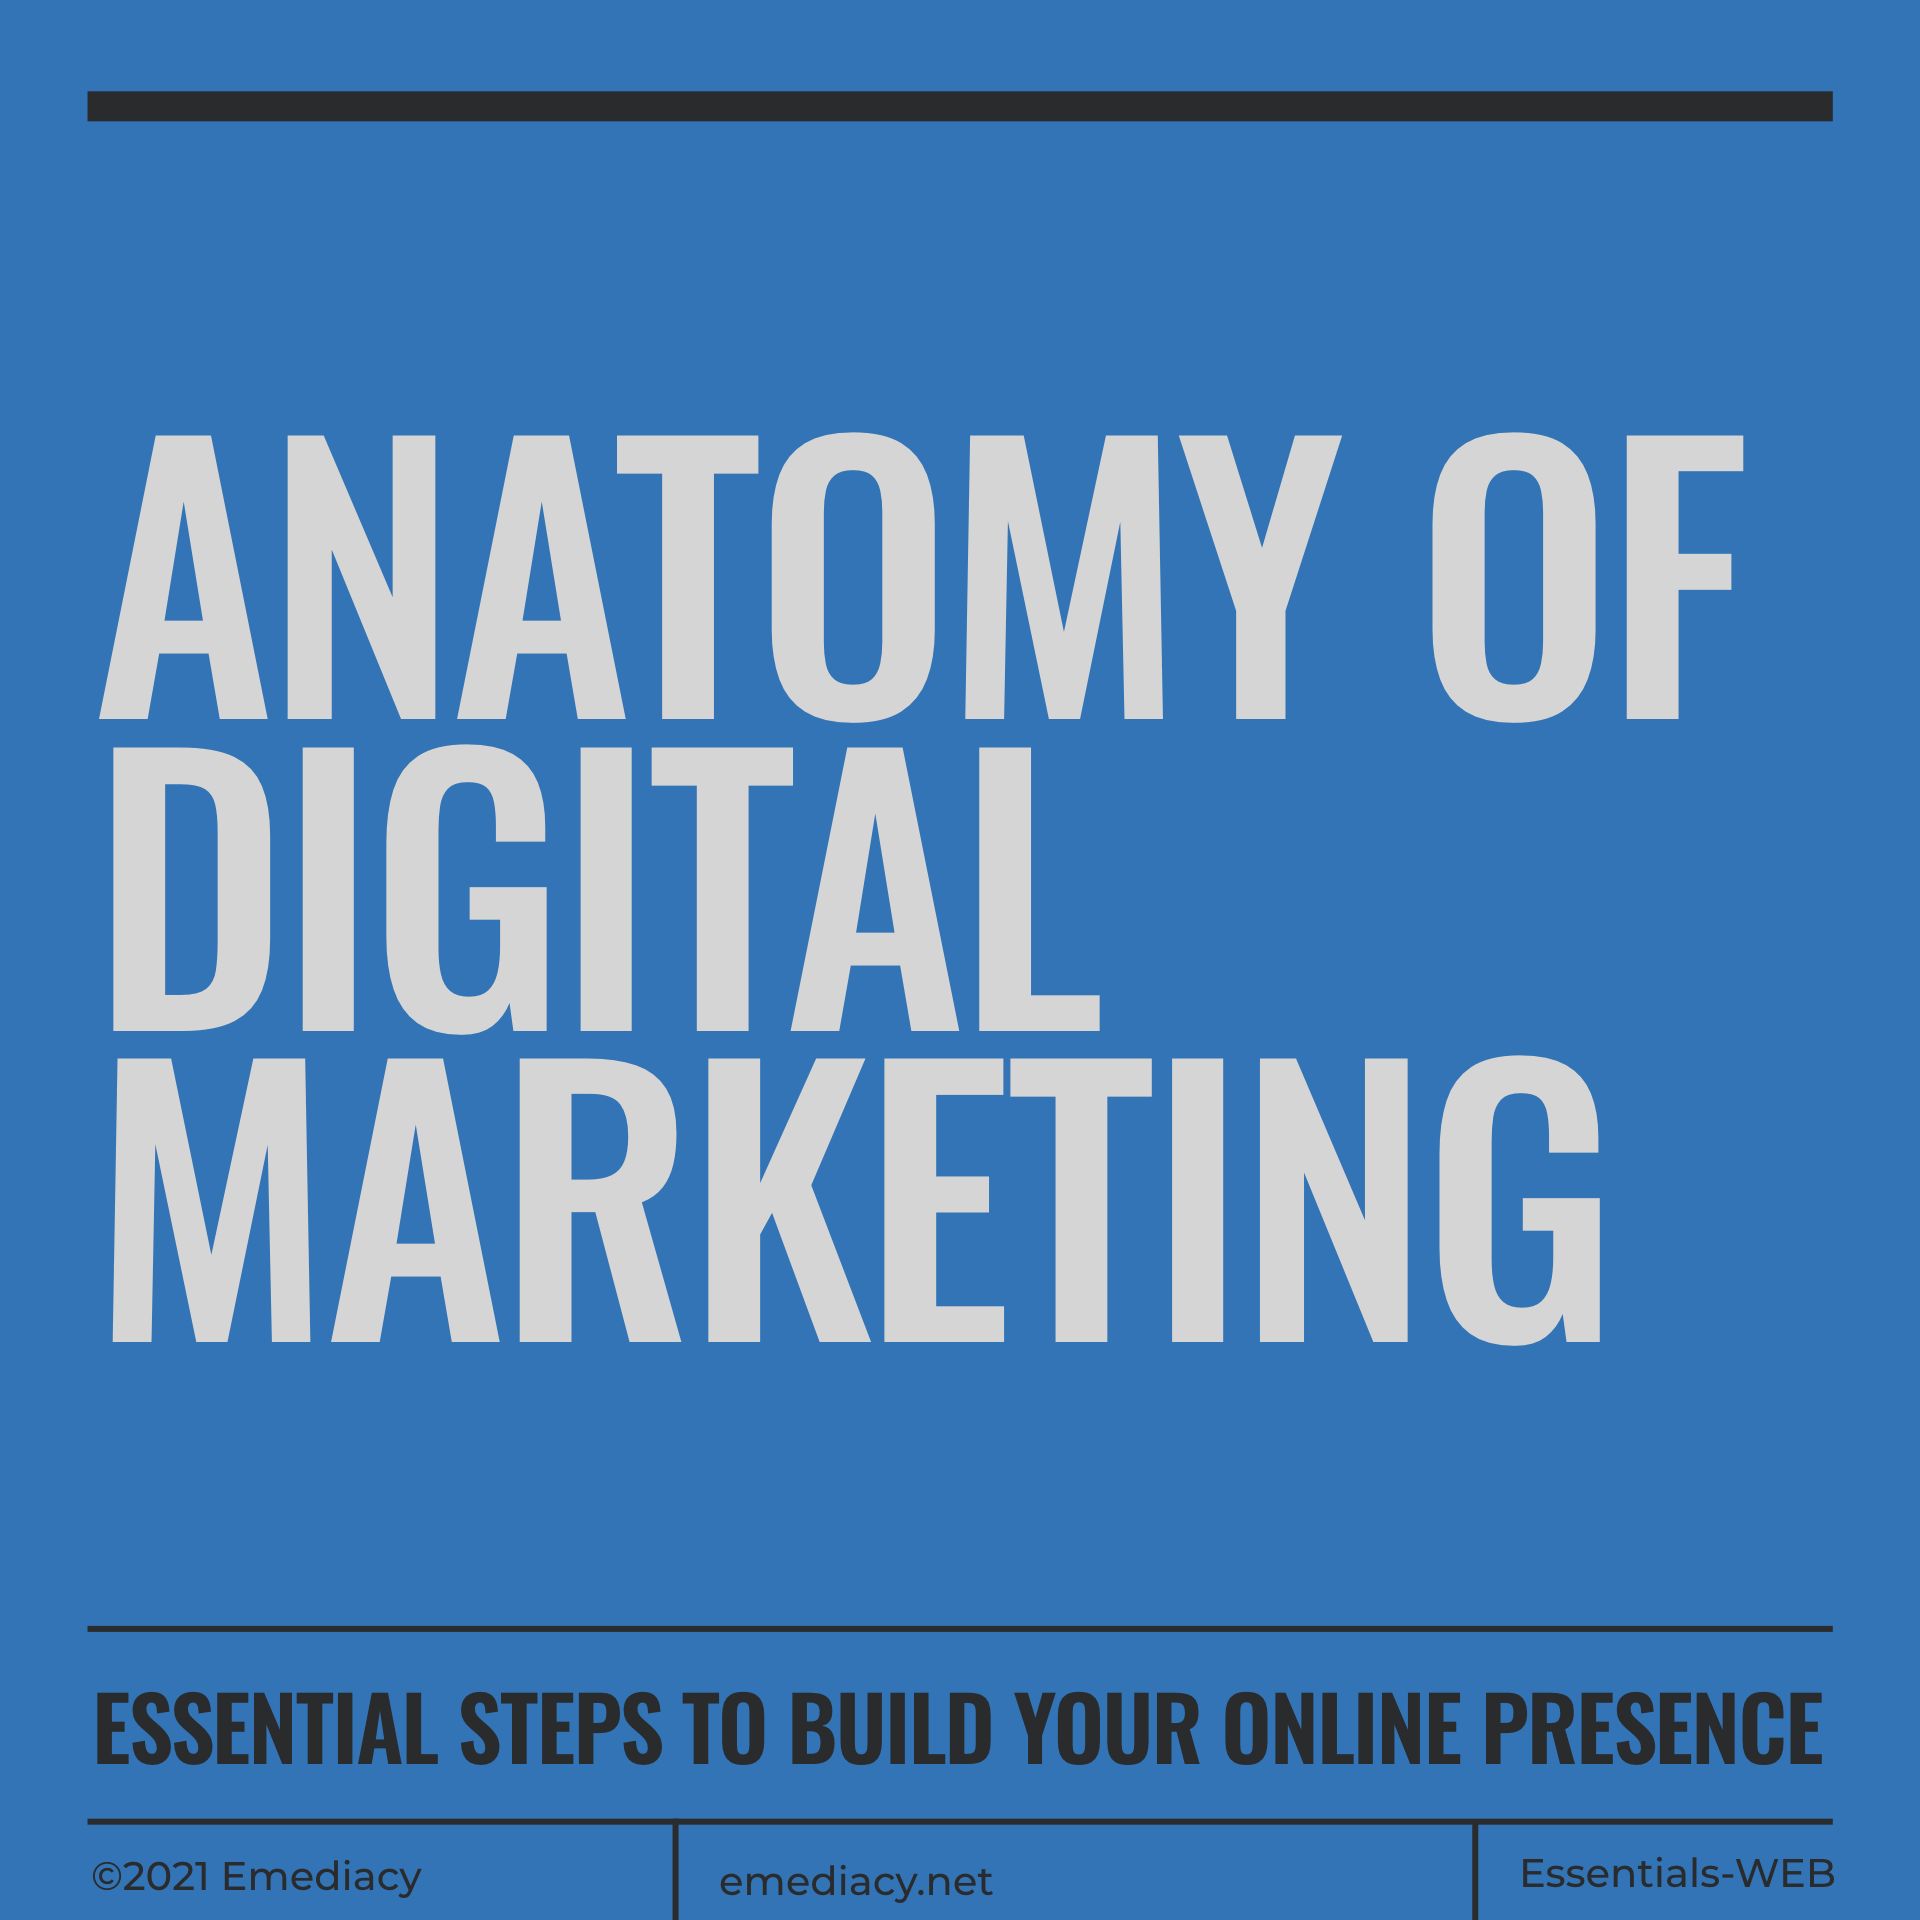 Anatomy of Digital Marketing